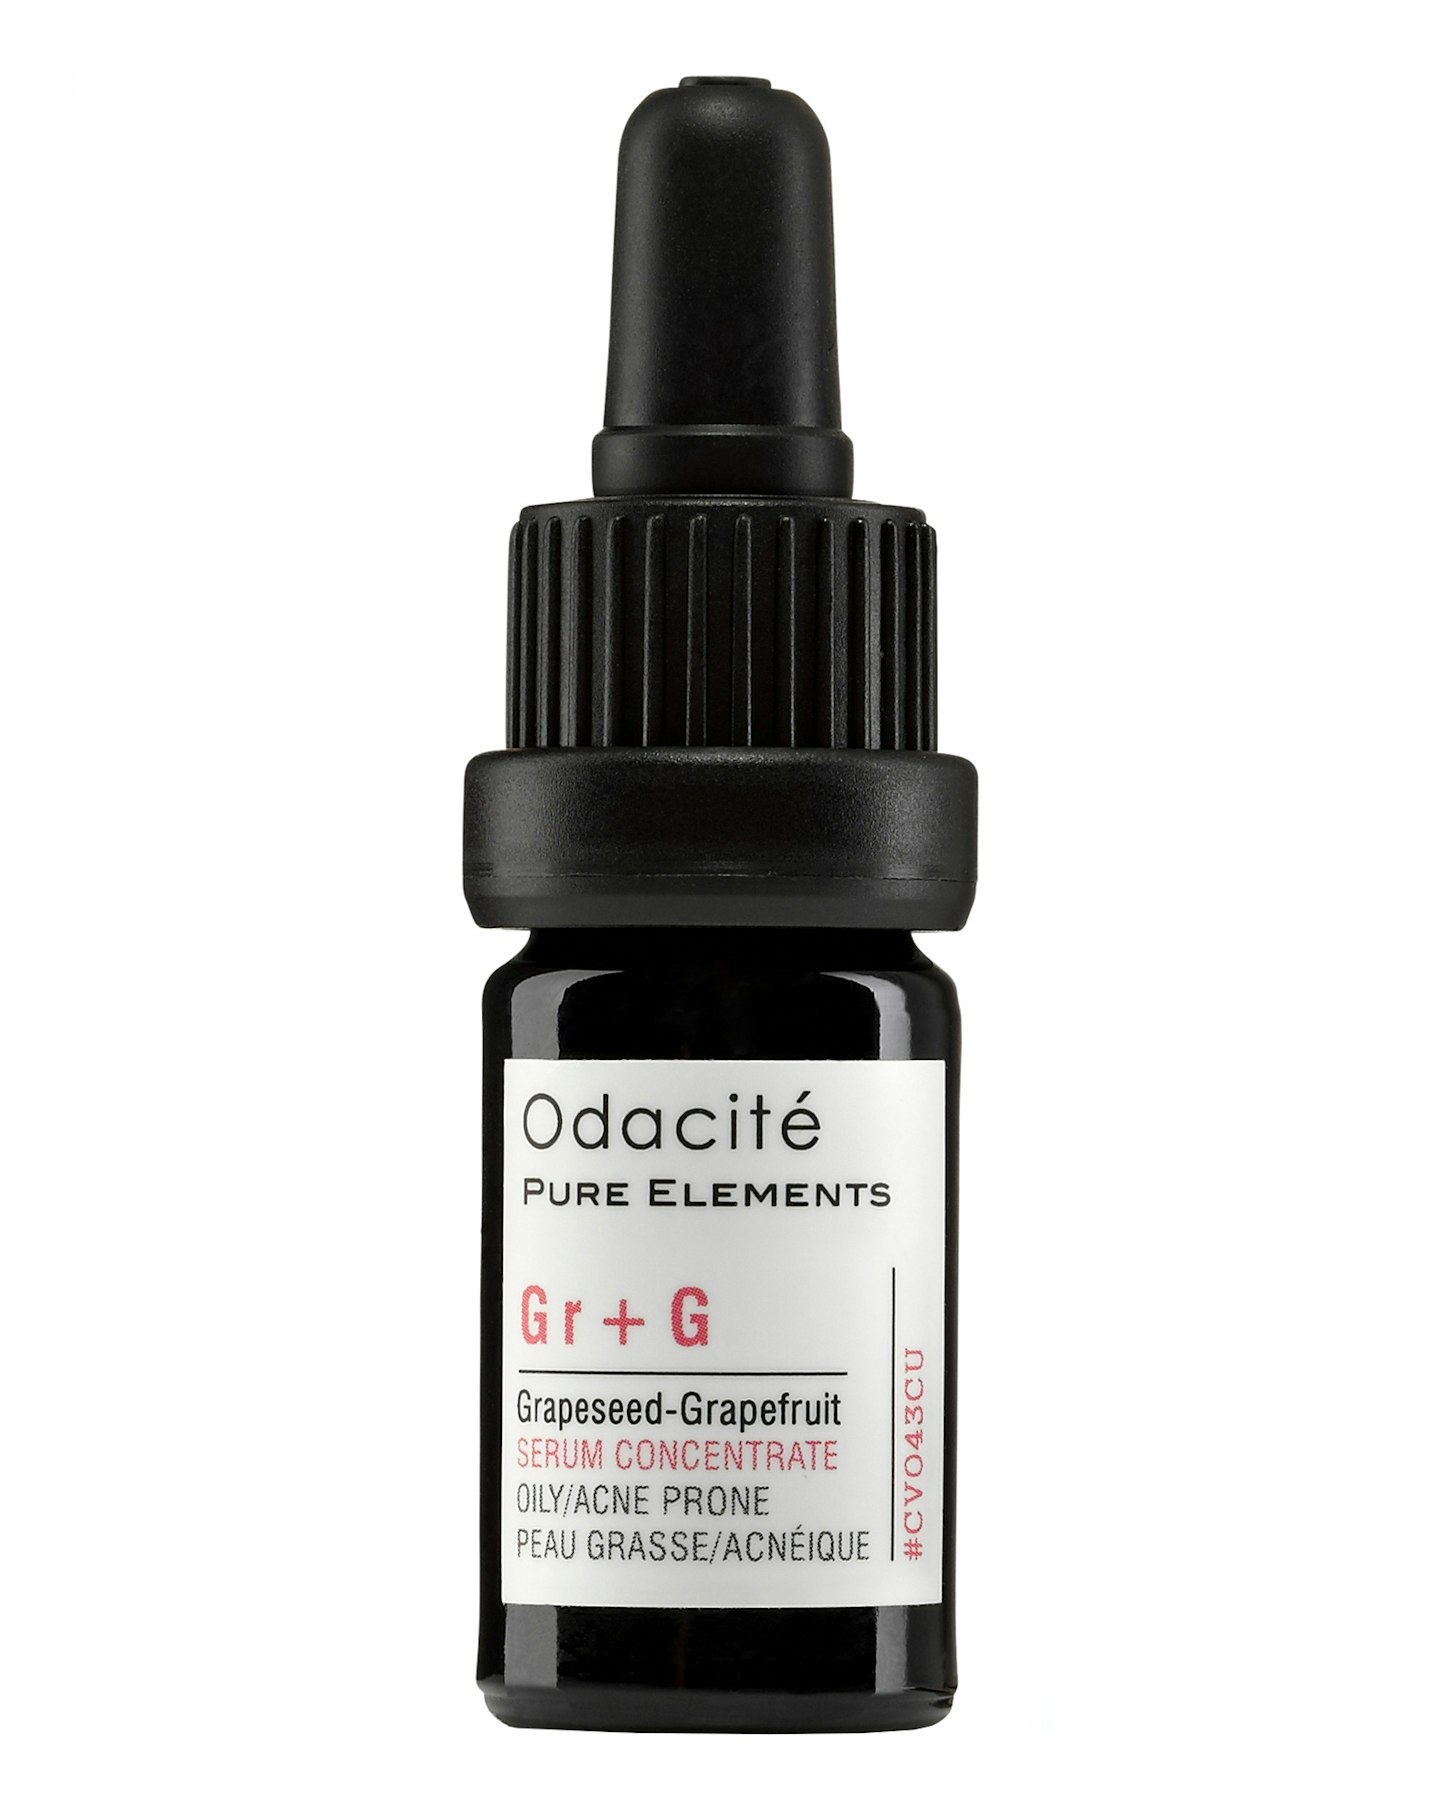 Odacité Gr+G Oily/Acne Prone Serum Concentrate (Grapeseed + Grapefruit), £32